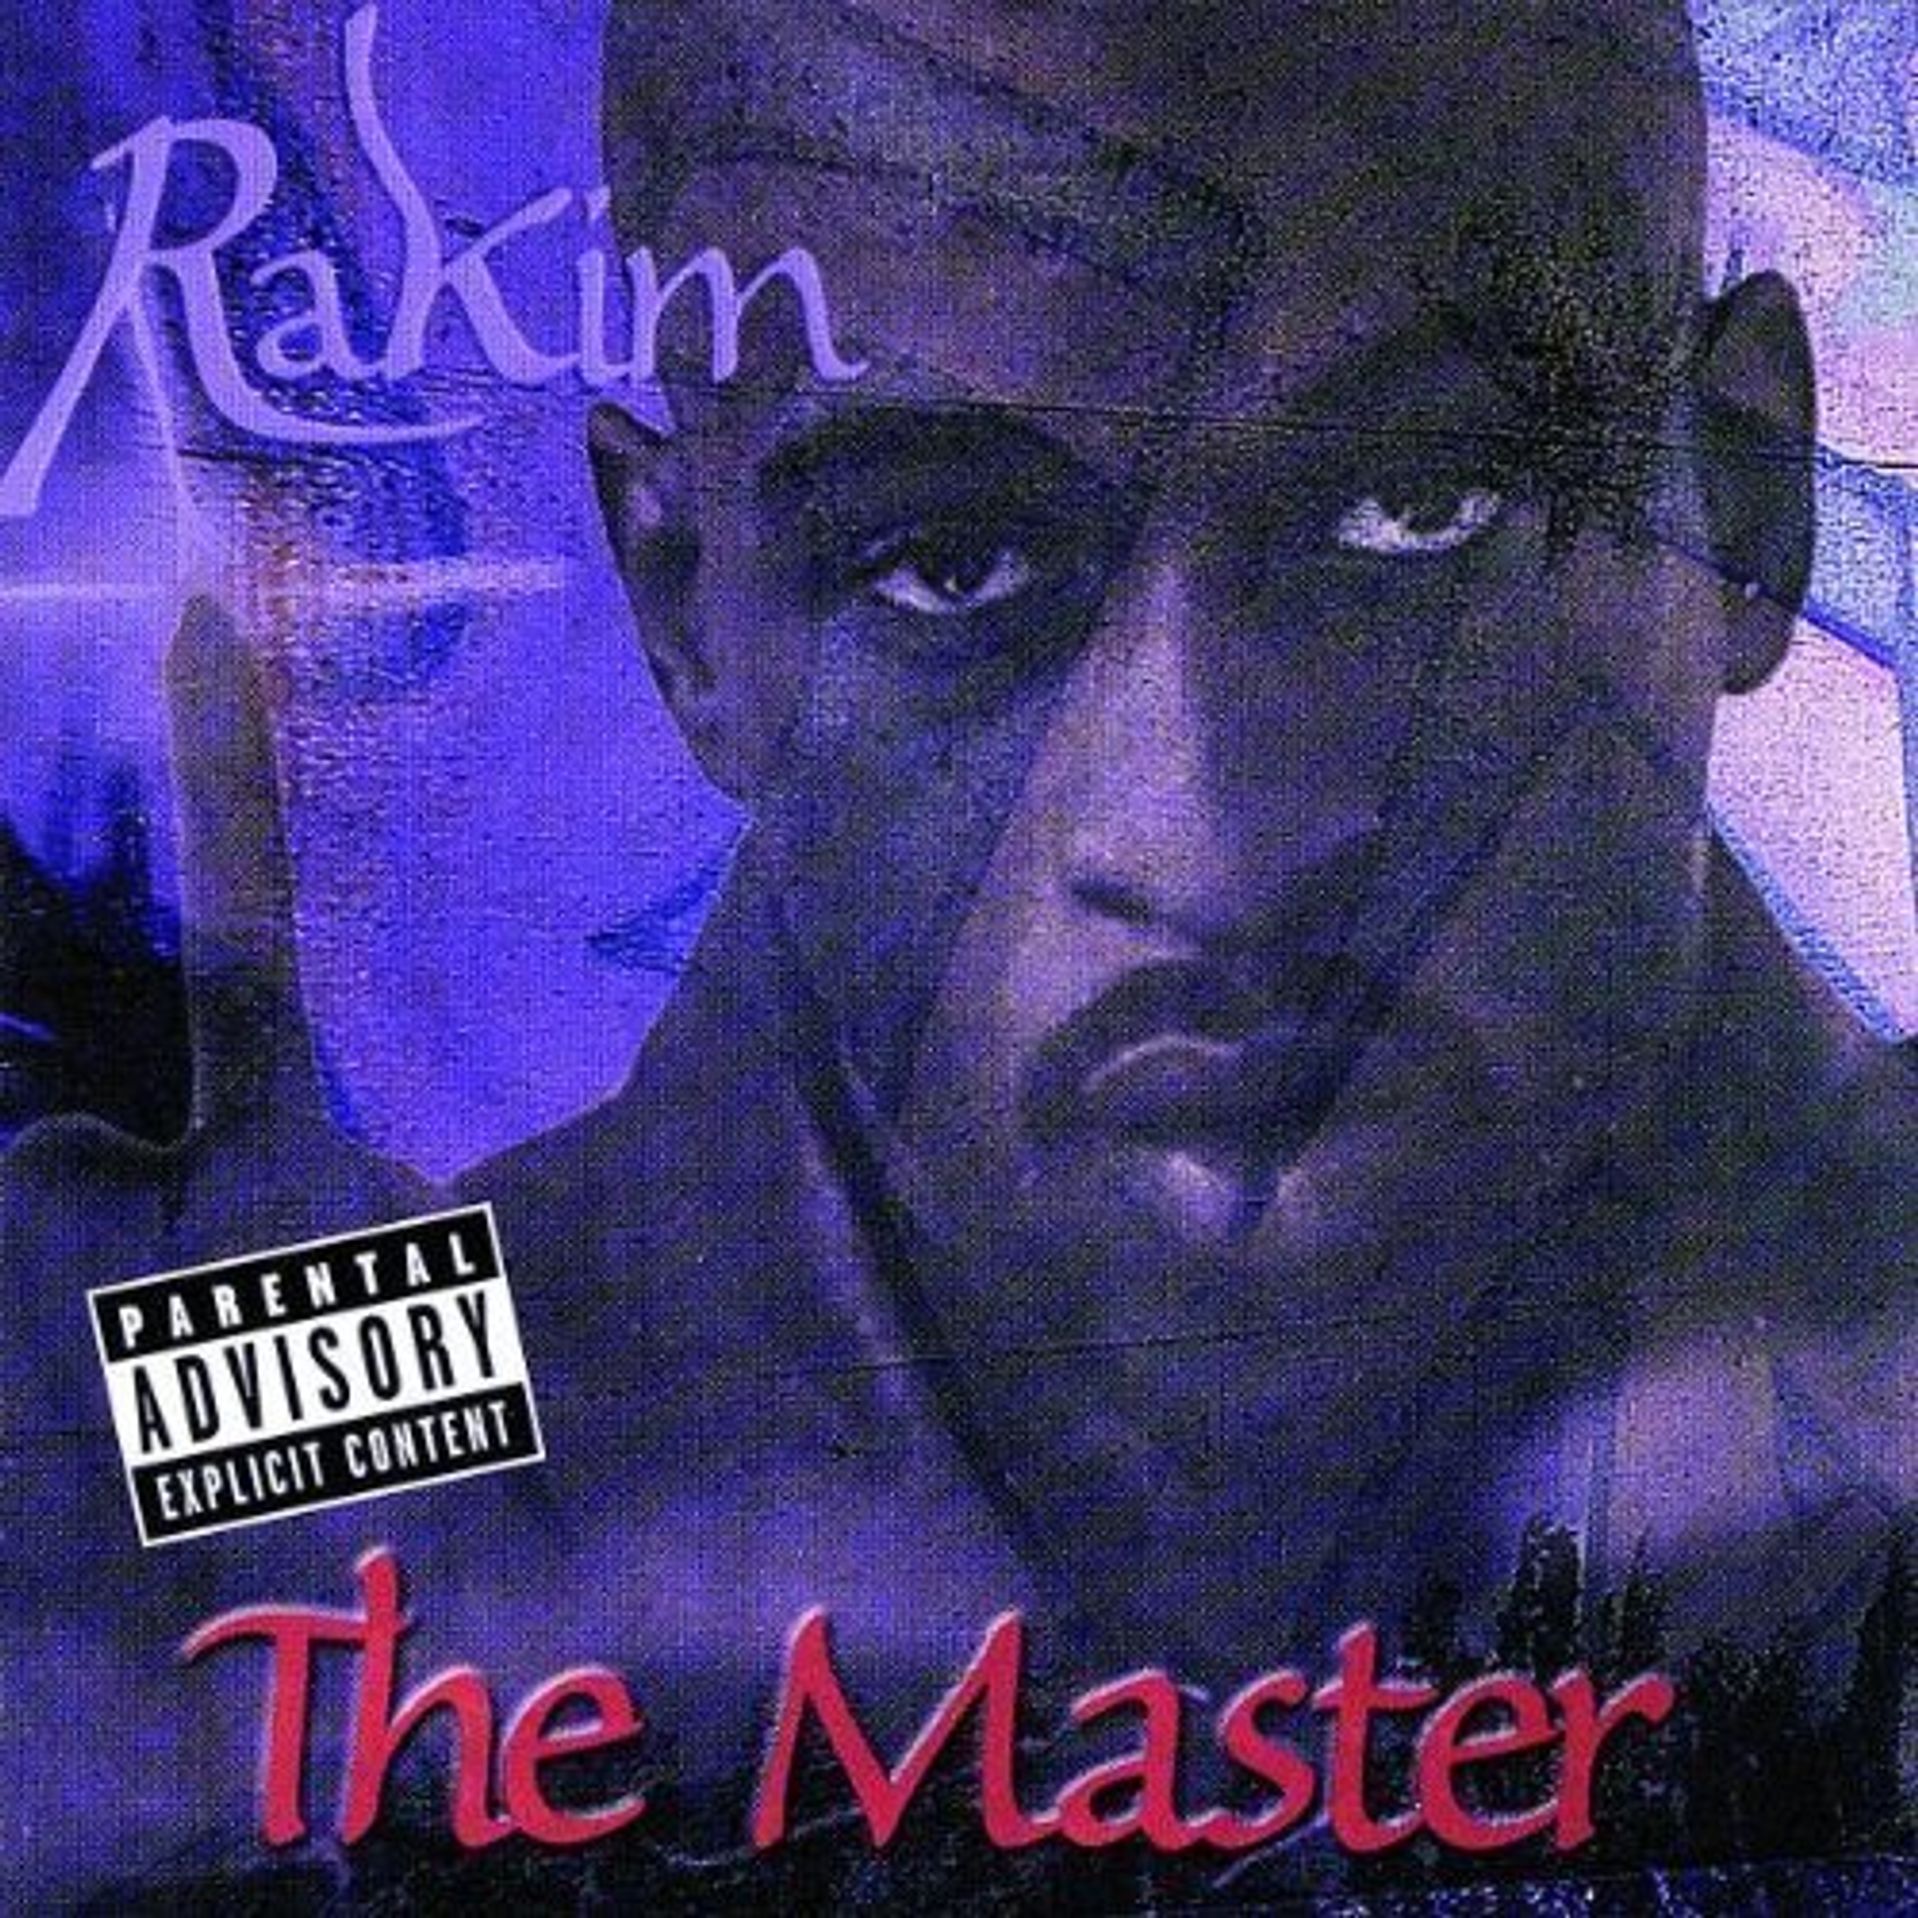 Album Title: The Master by: Rakim